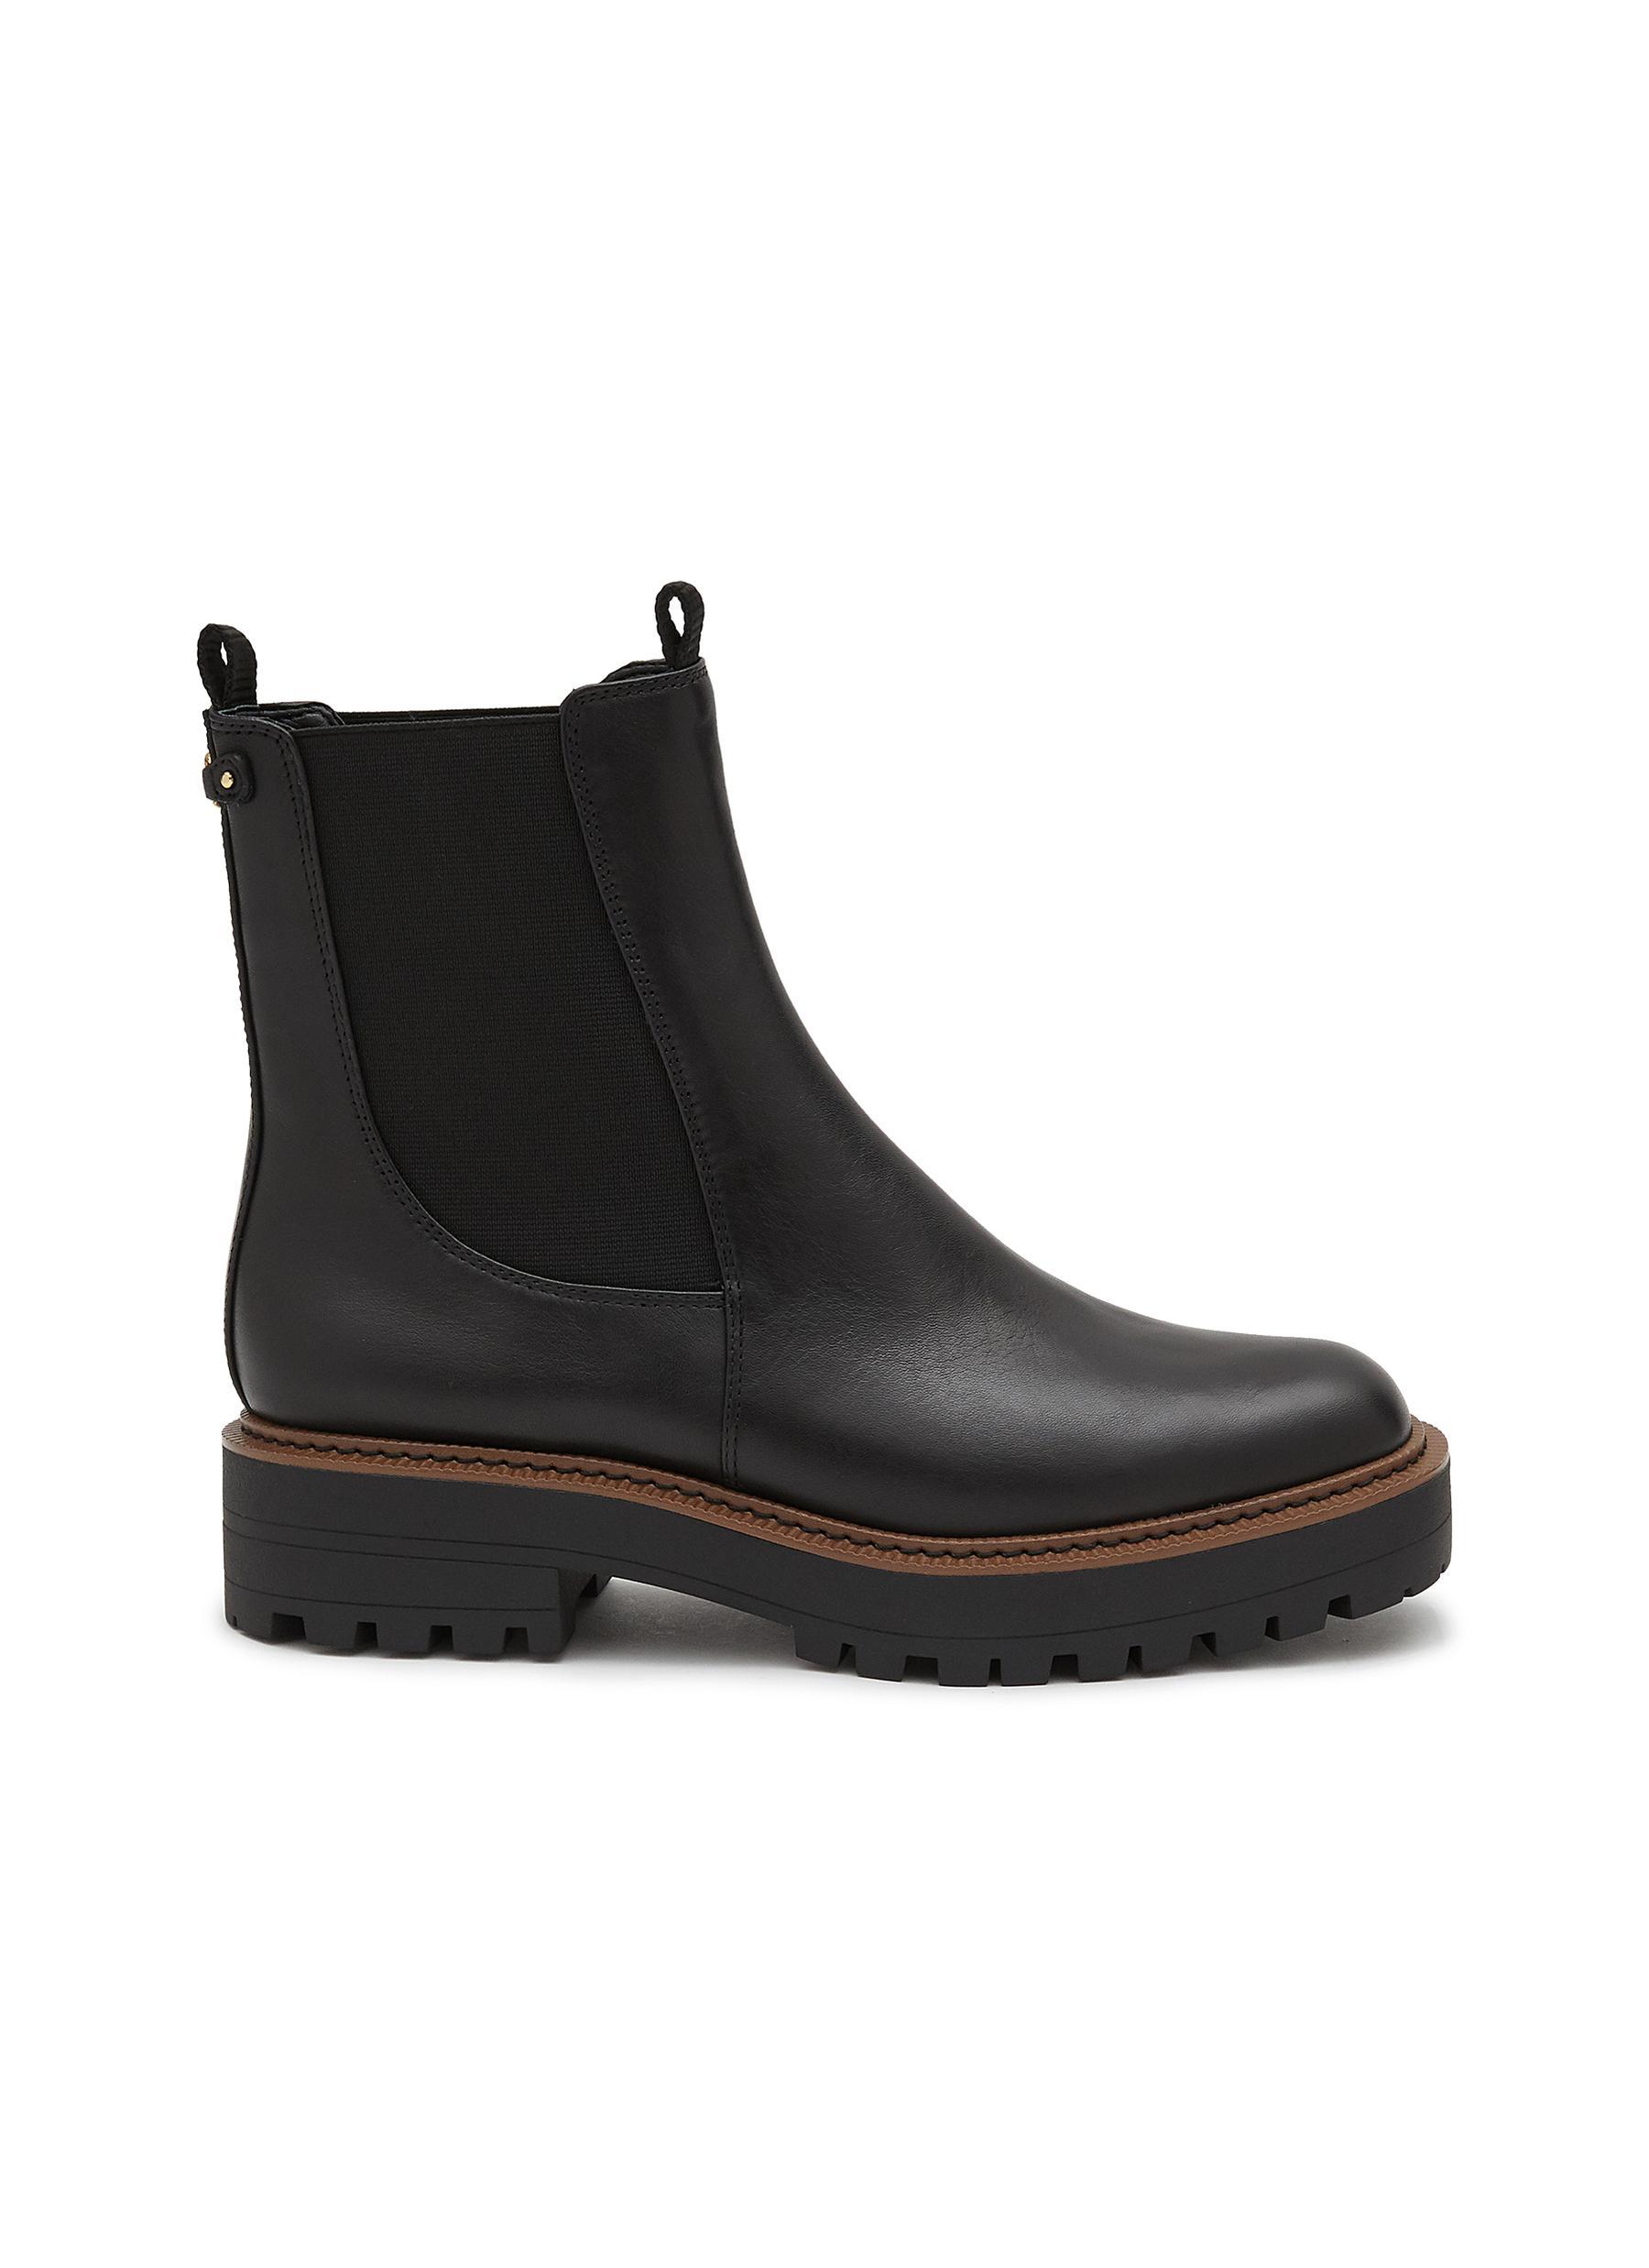 Sam Edelman Laguna 40 Leather Chelsea Boots in Black | Lyst